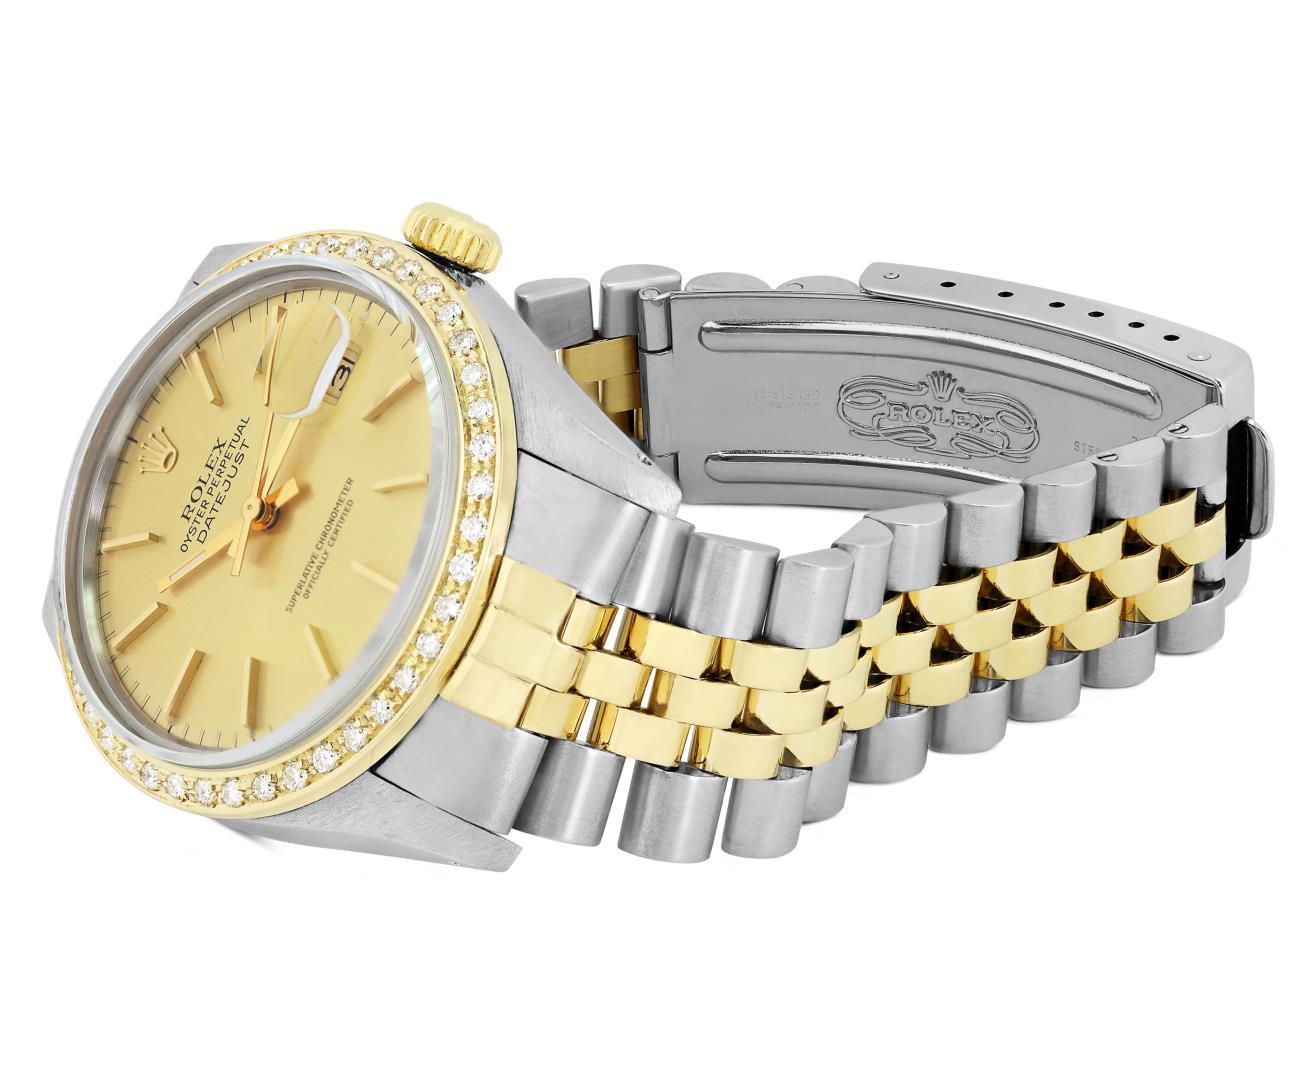 Rolex Mens 2 Tone Champagne Index Diamond Bezel Datejust Wristwatch With Rolex B